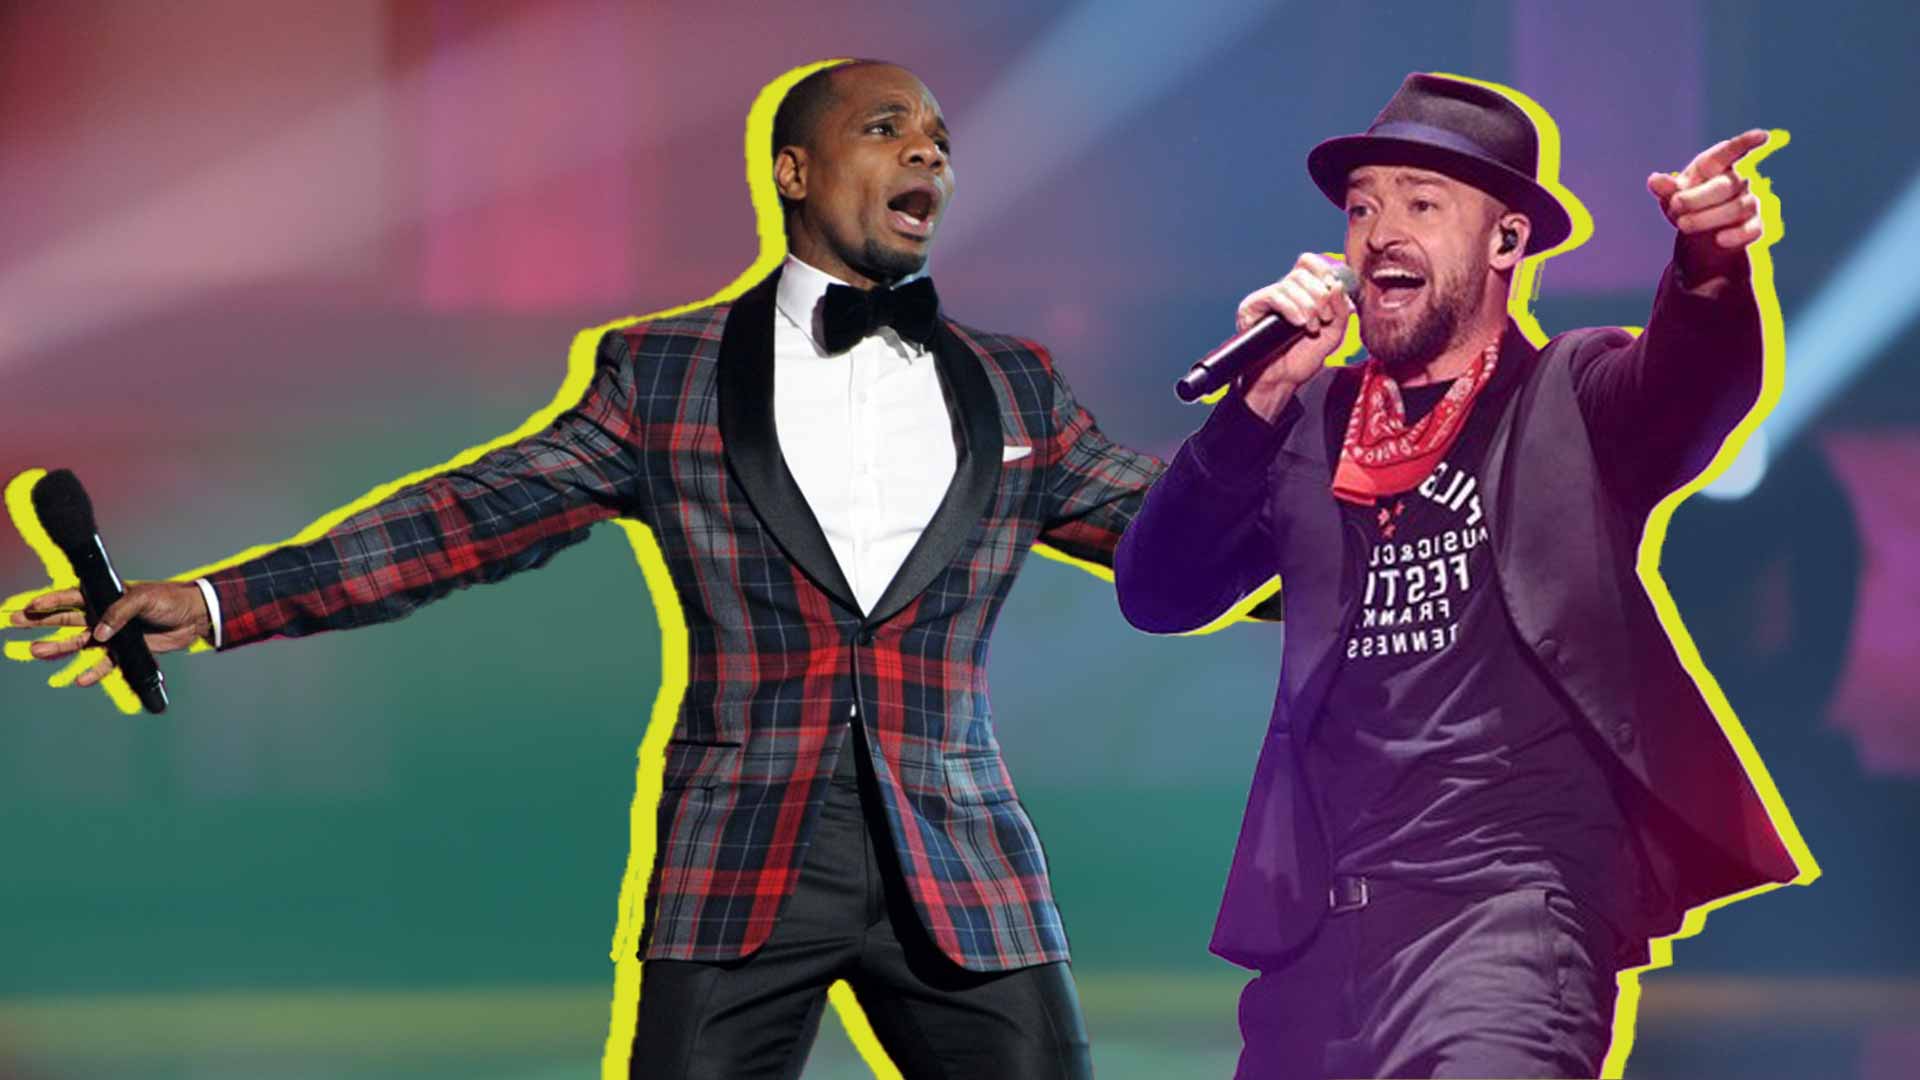 Justin Timberlake and Kirk Franklin Sing sing "Better Days"